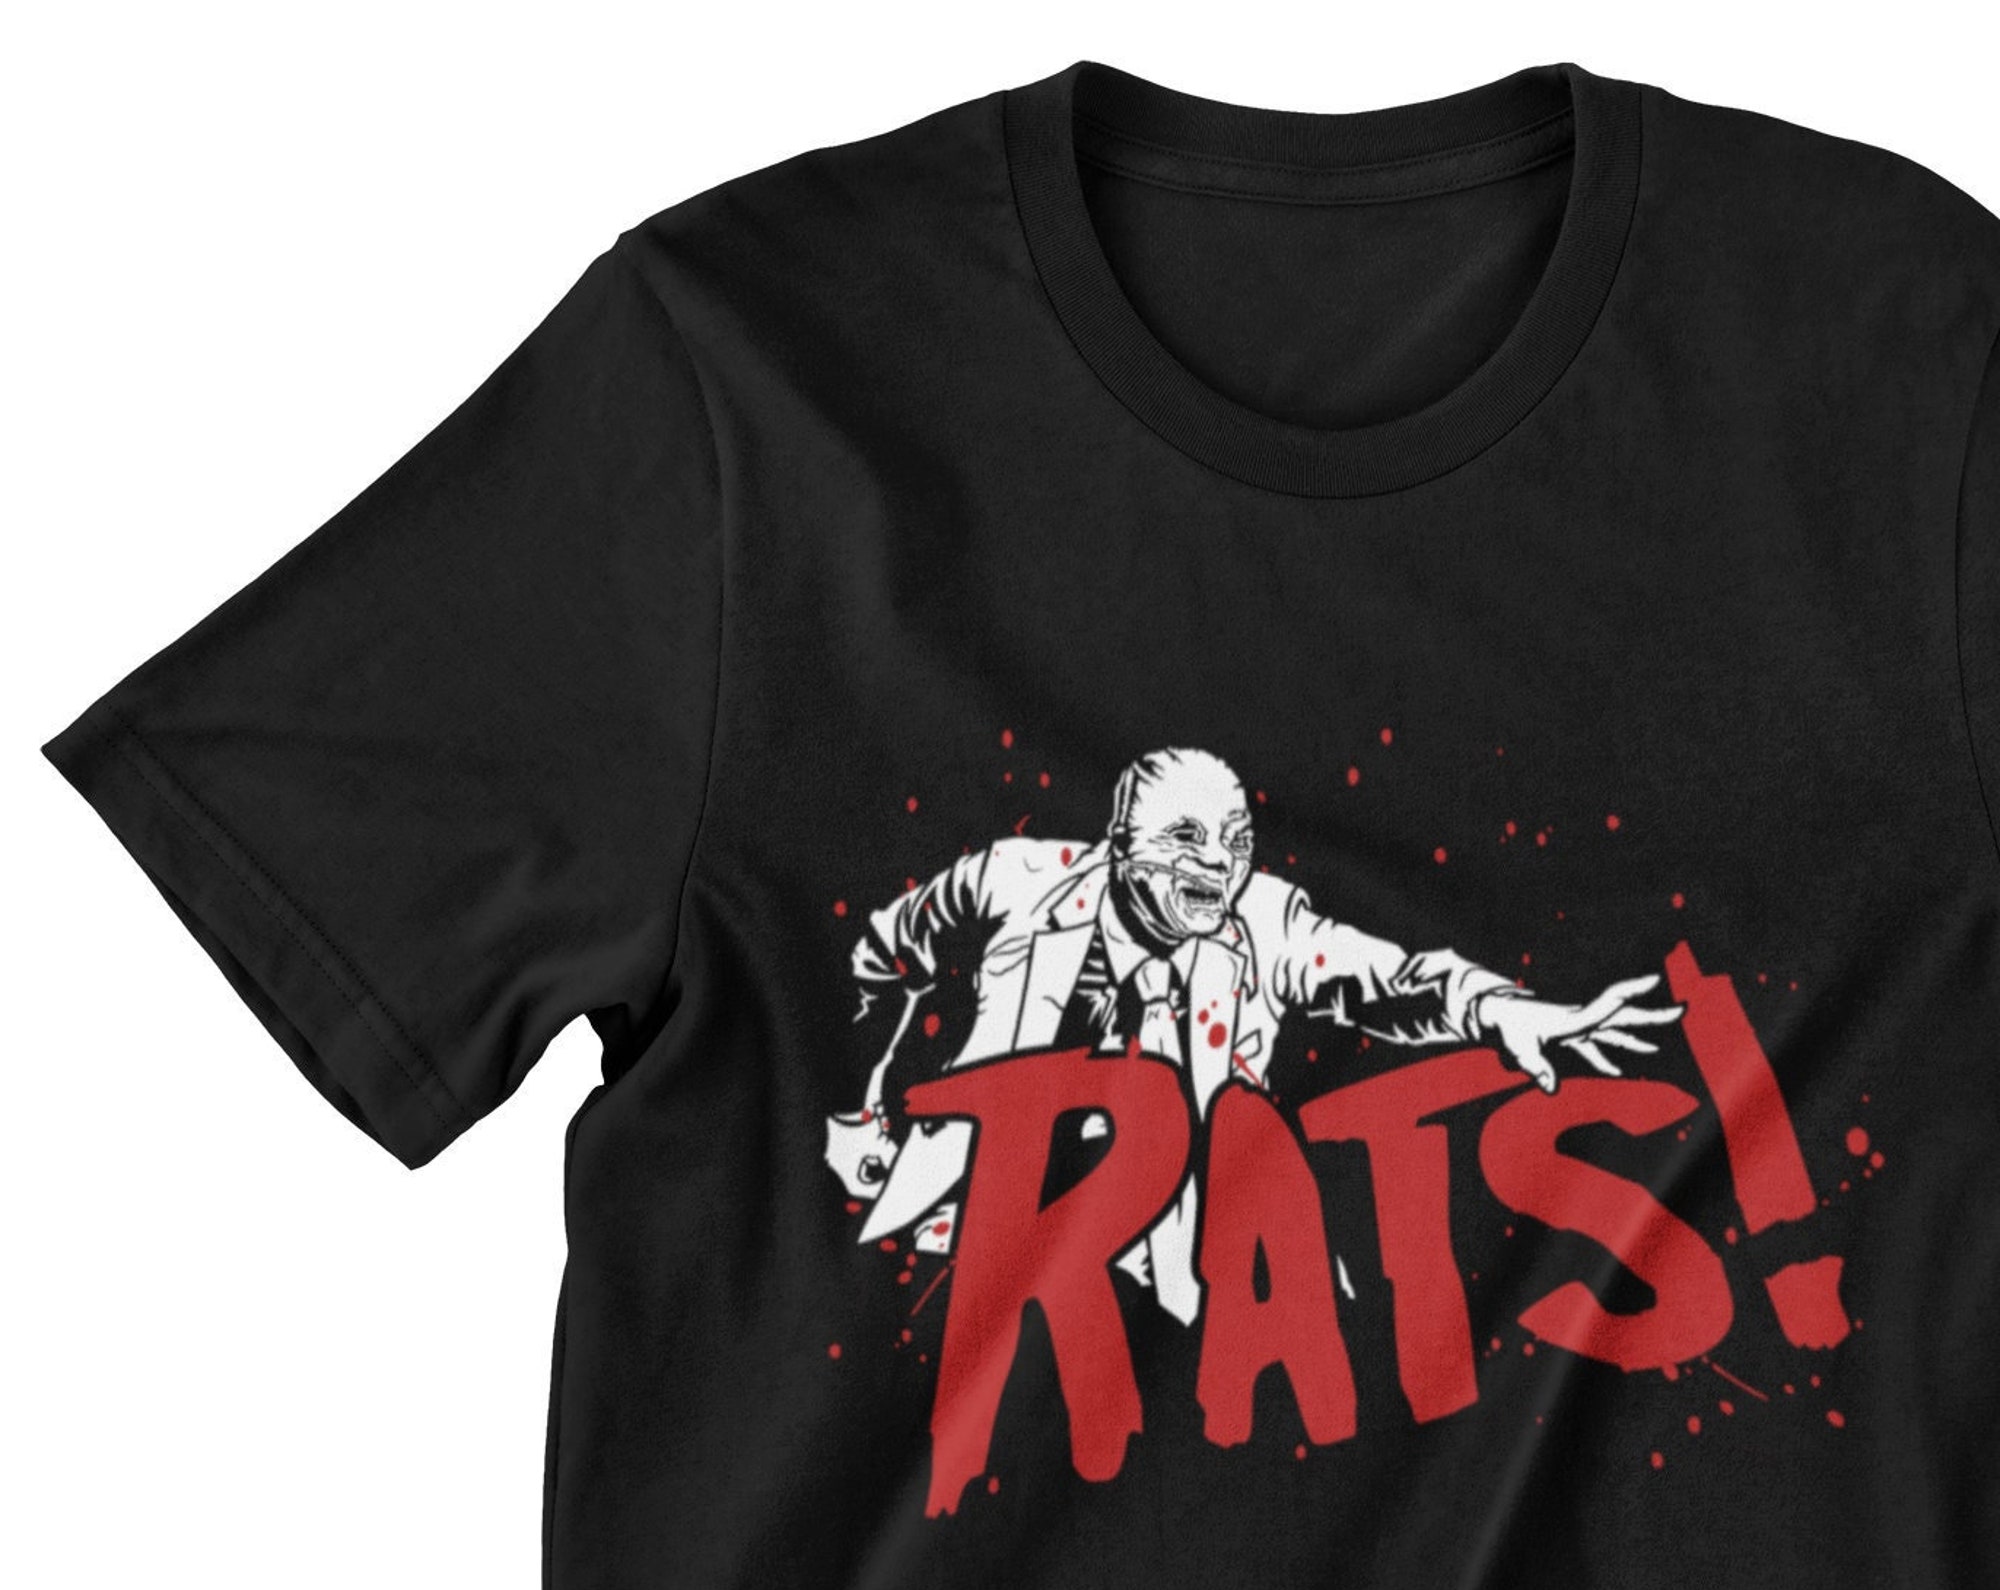 Discover RATS!, Reunion Tour Inspired MCR fan T-Shirt